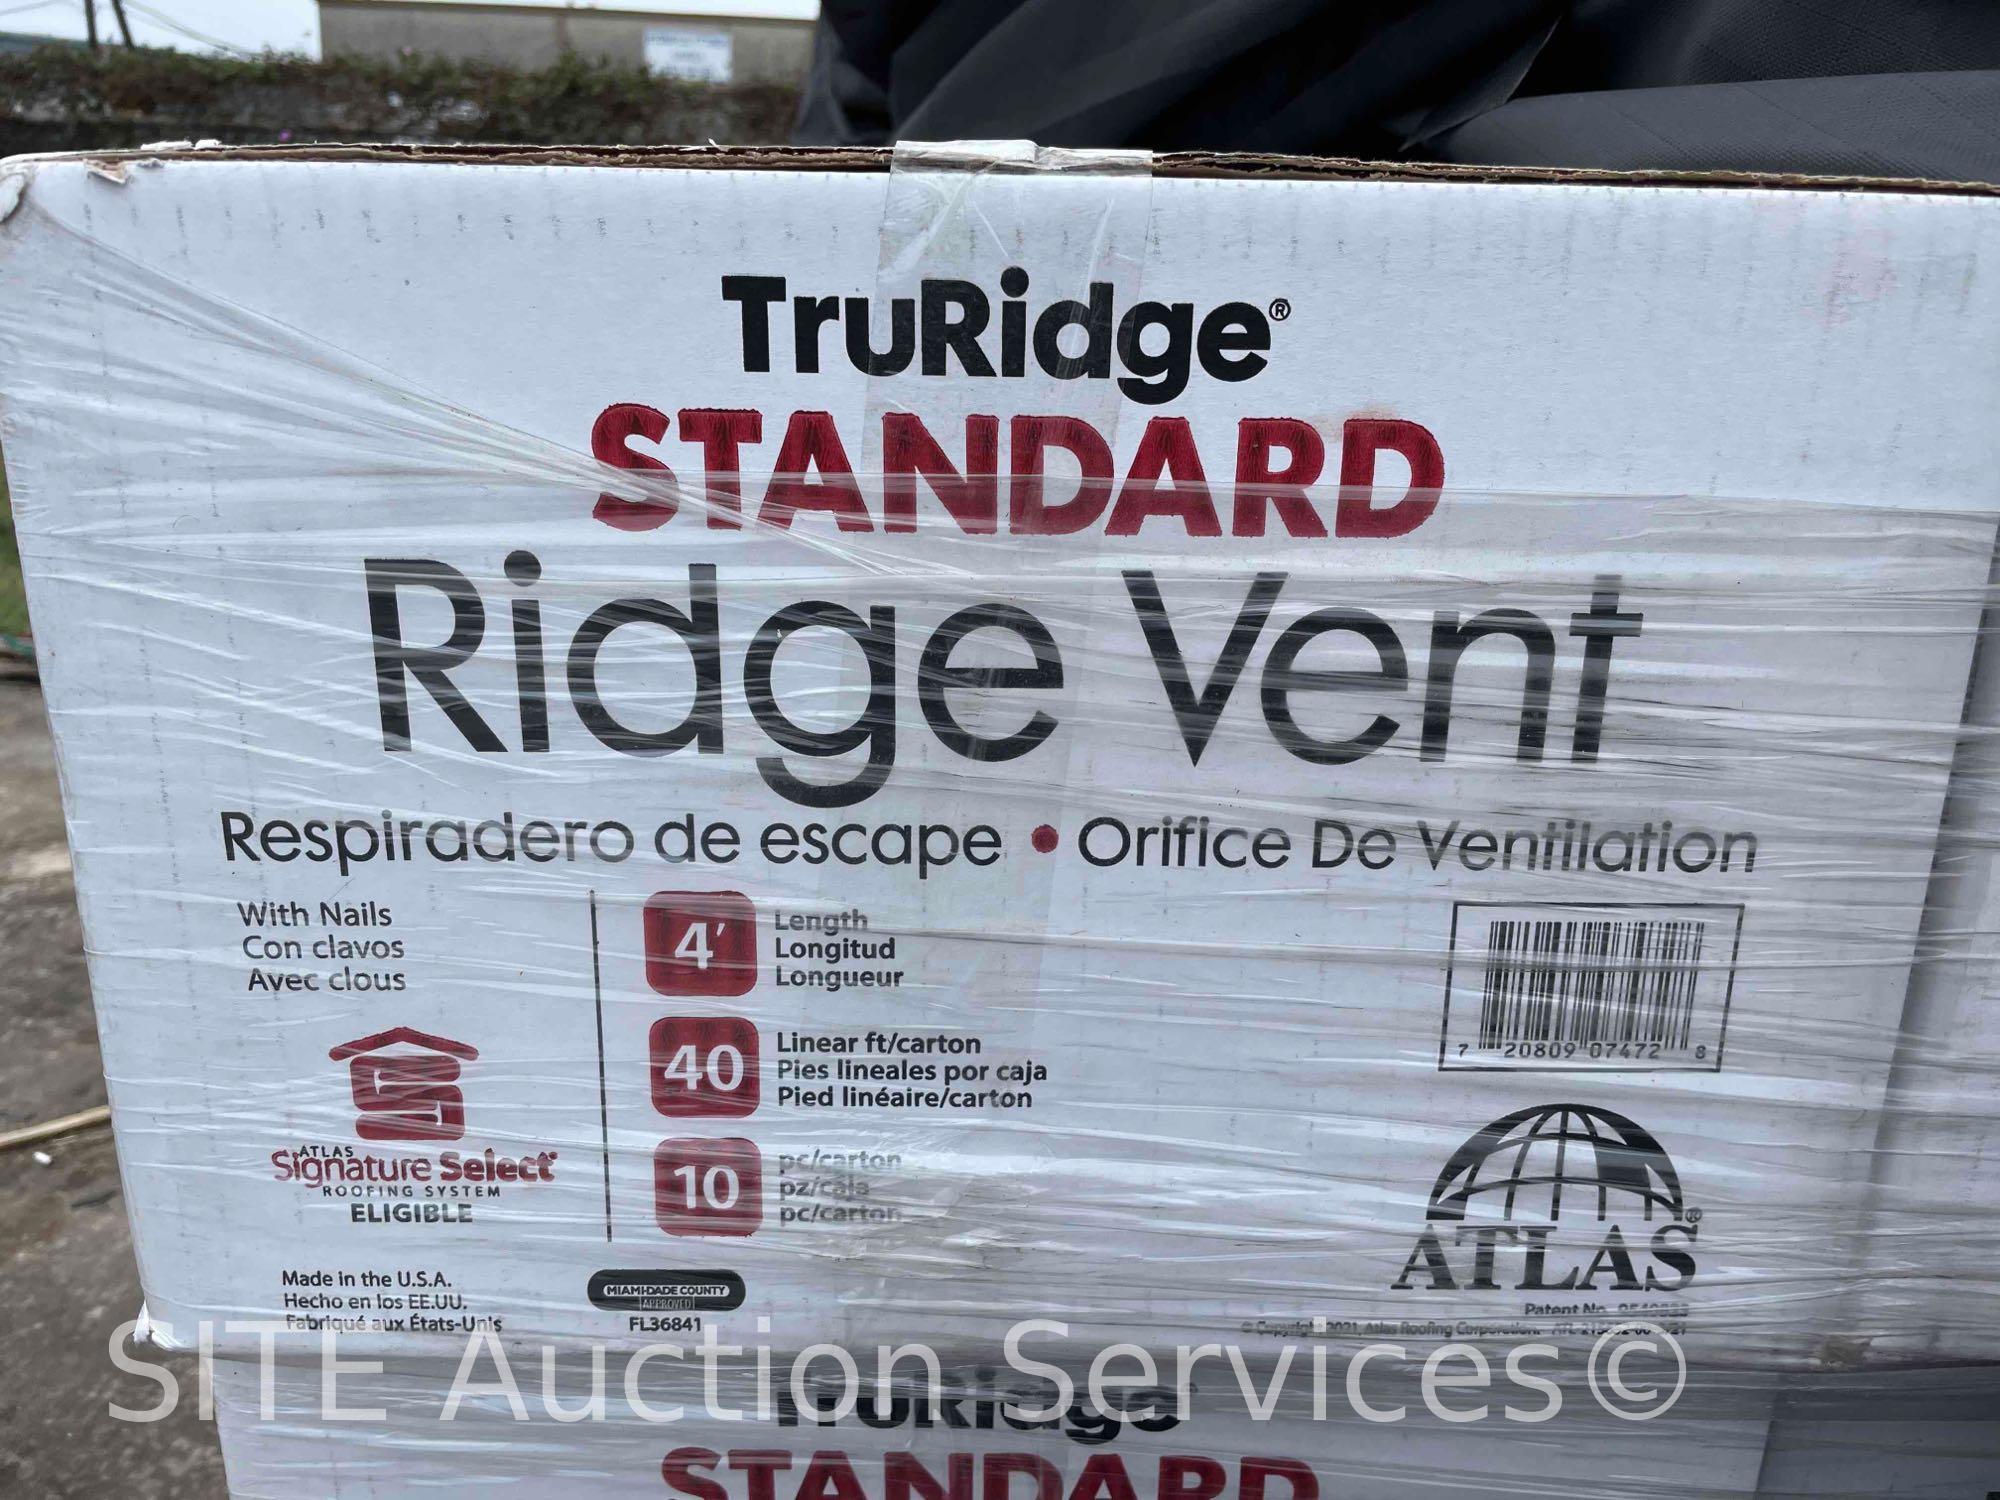 Pallet of TruRidge Standard Ridge Vent